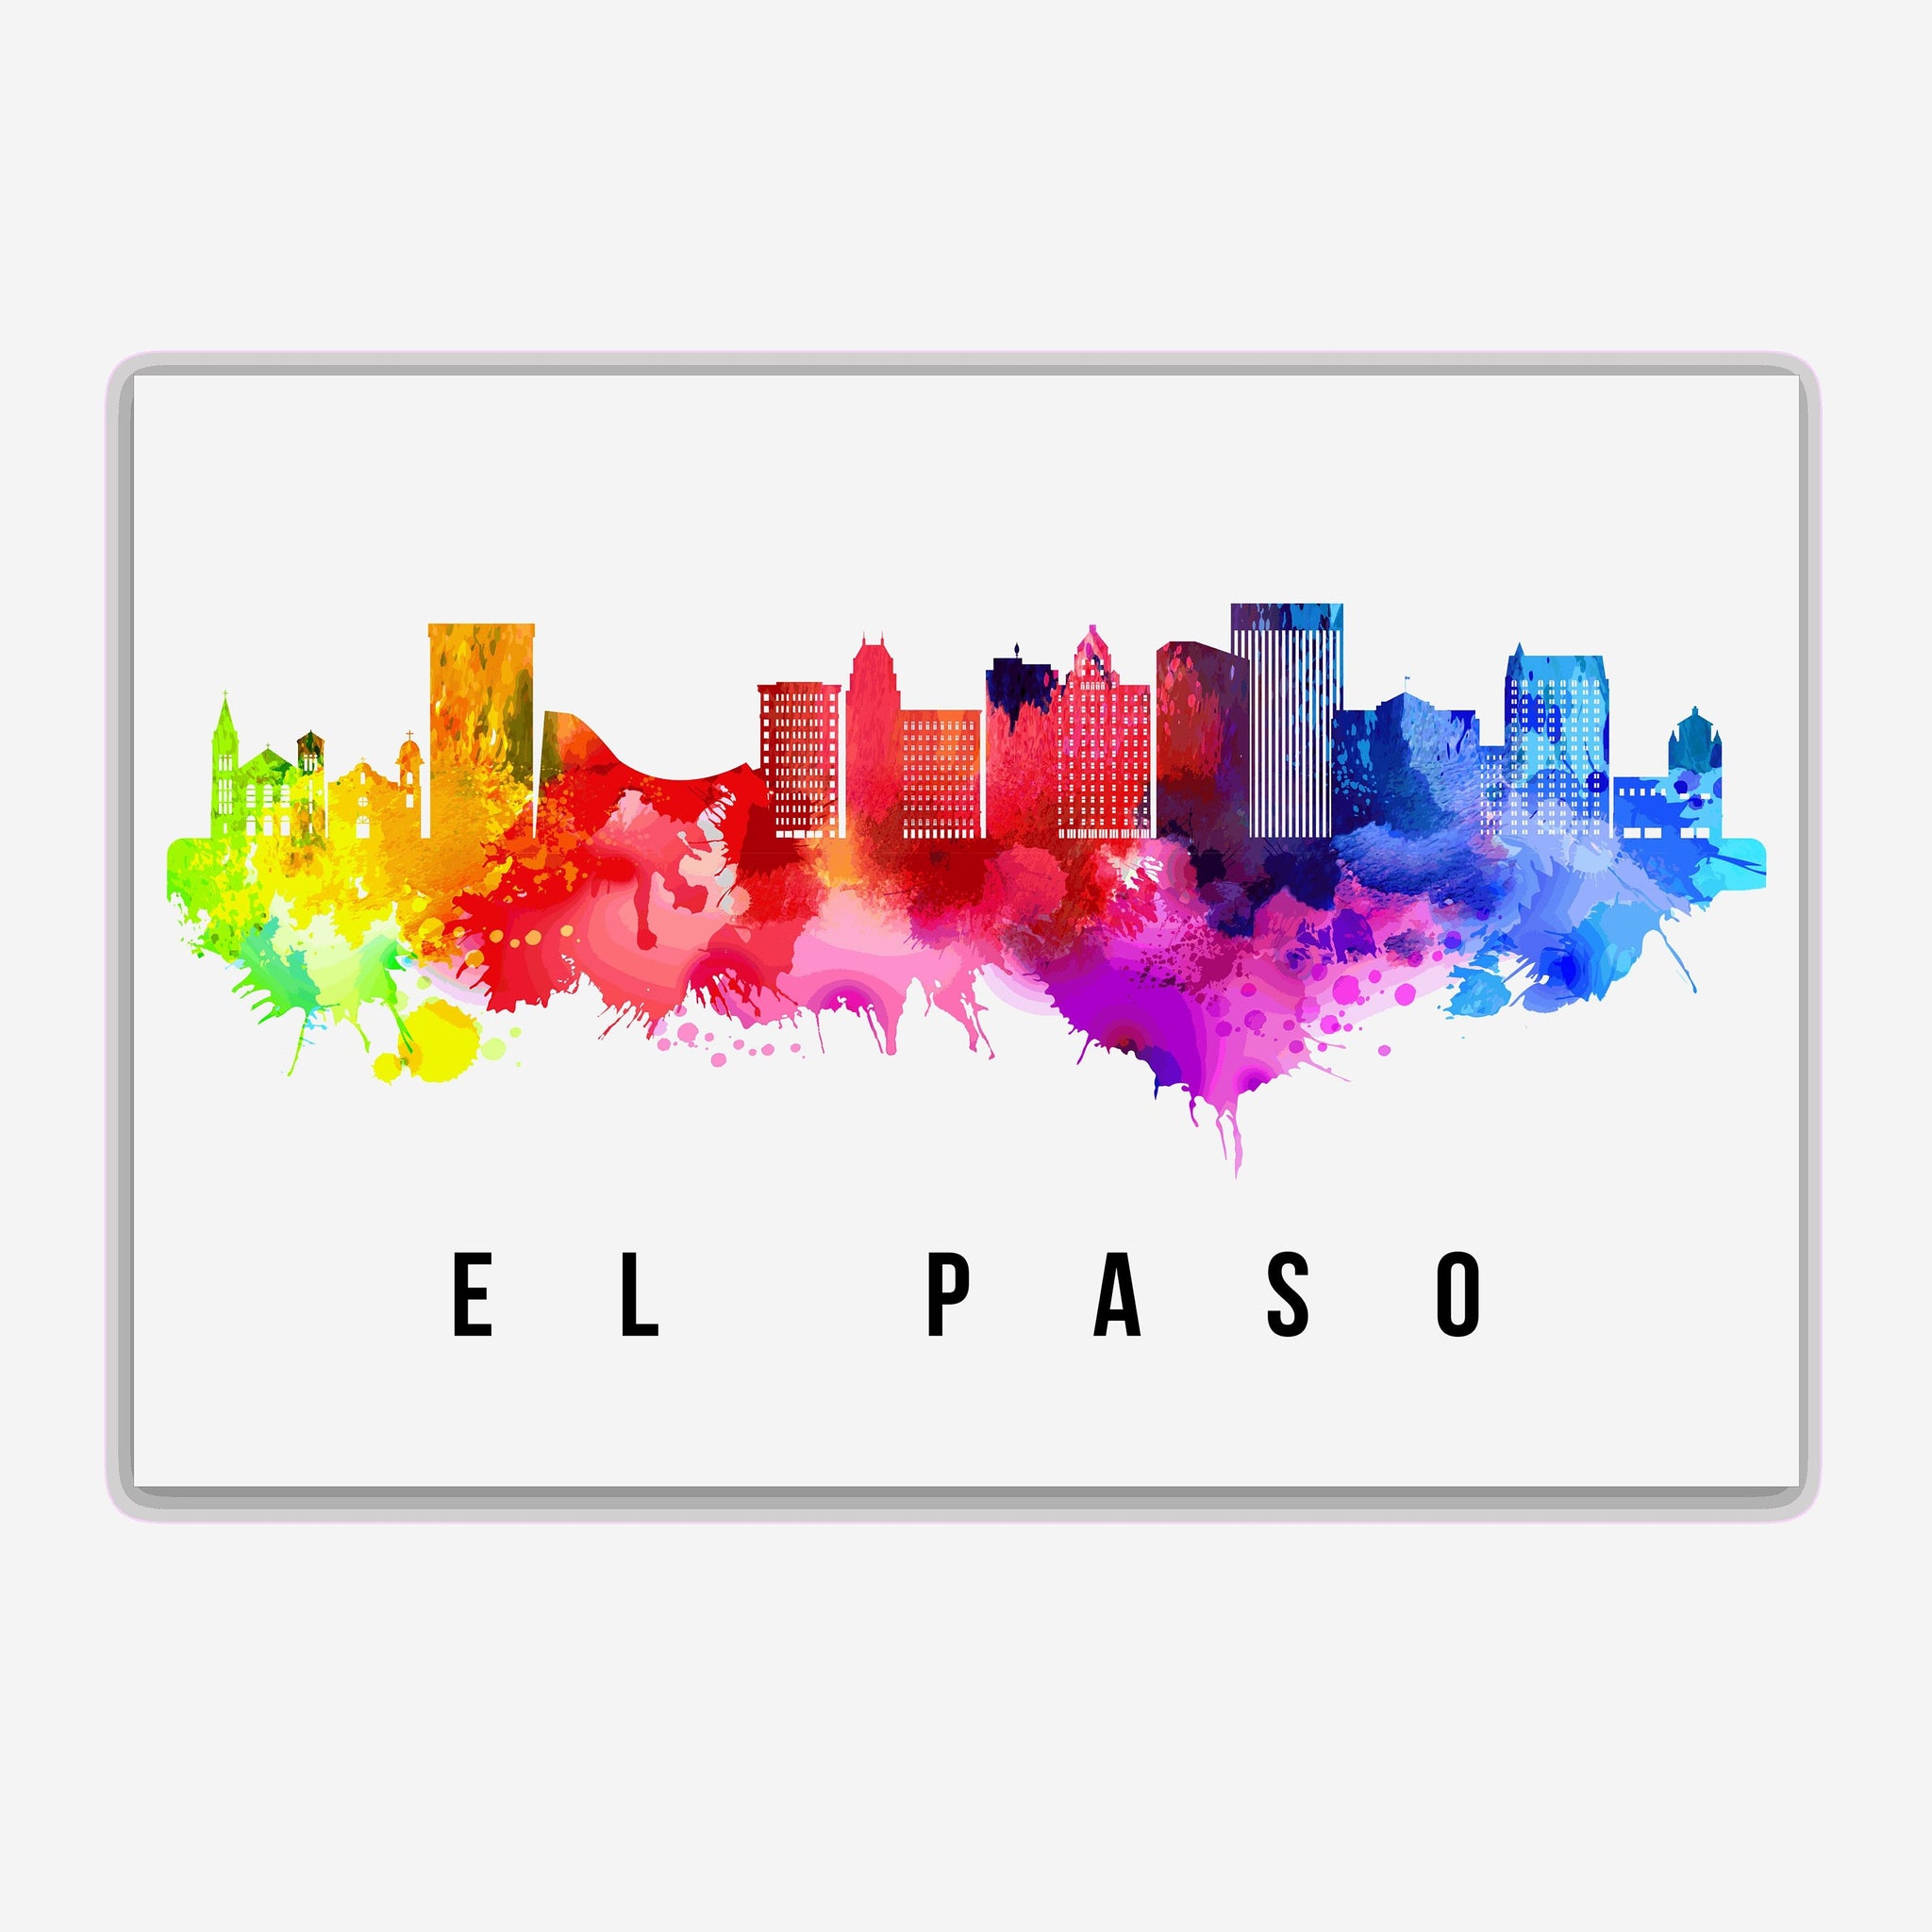 El Paso Texas Skyline Poster, El Paso Texas Cityscape painting poster, El Paso Texas landmark and cityscape Print, Home art, Office wall art